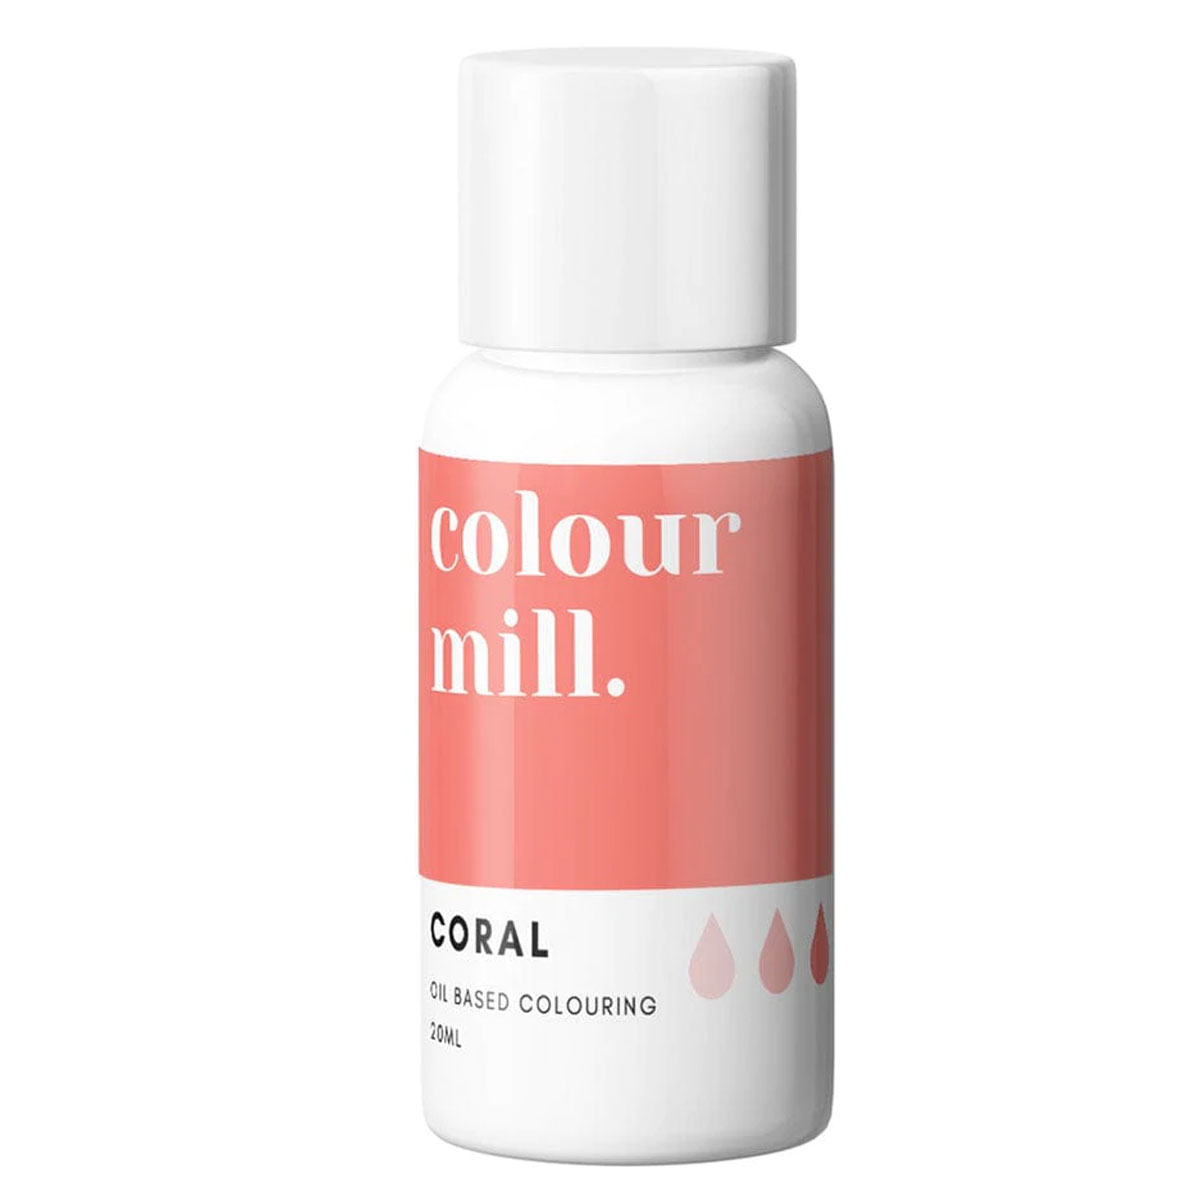 Colour Mill fettlösliche Lebensmittelfarbe - Coral 20ml